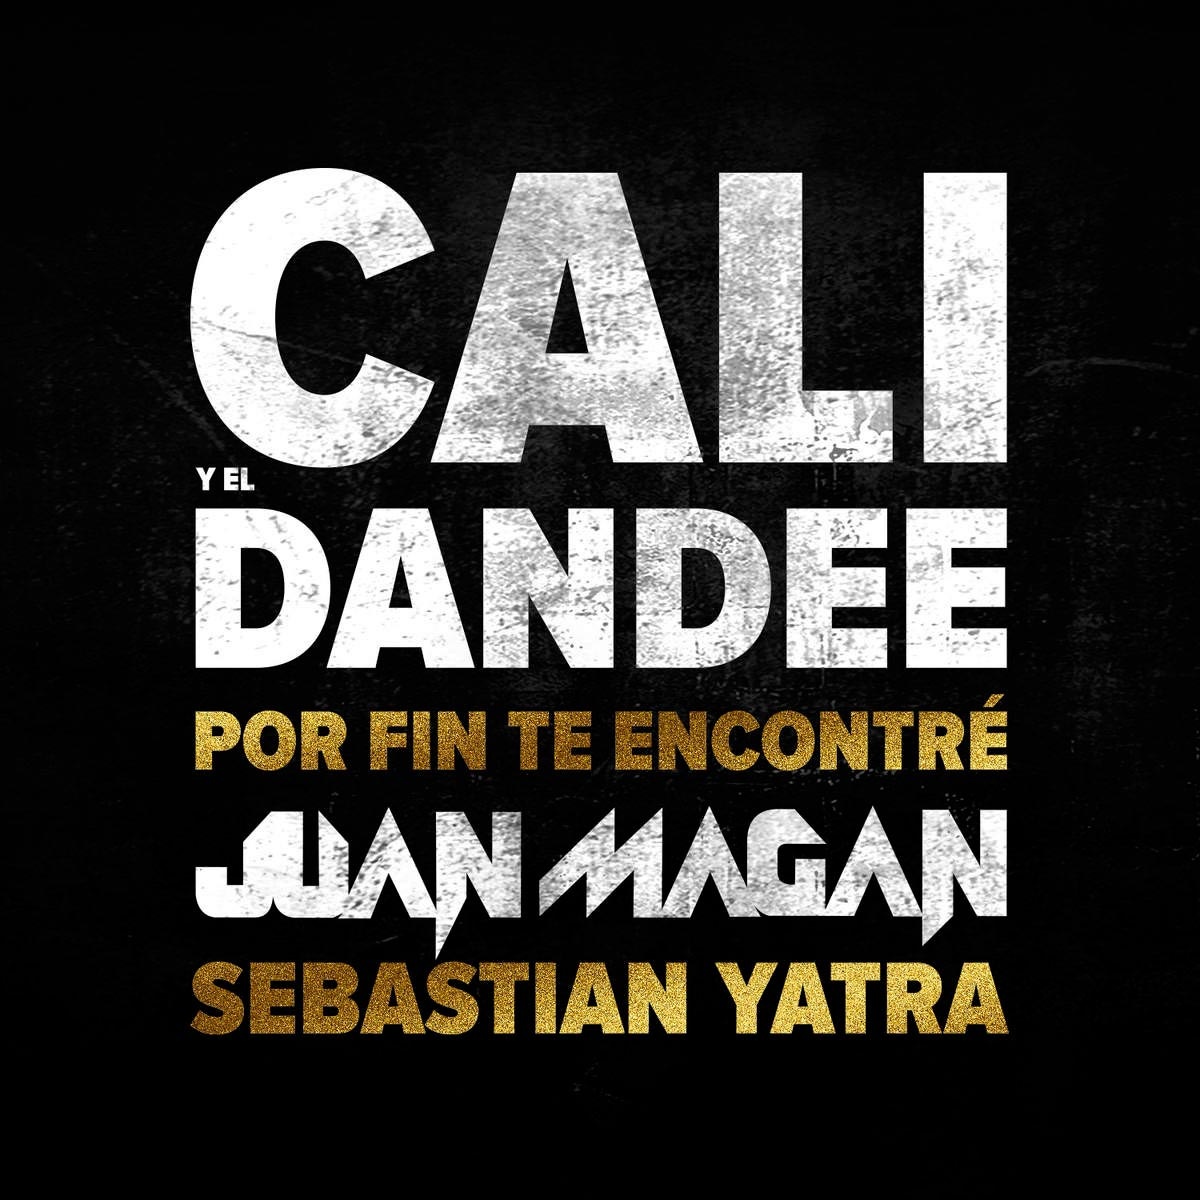 Por Fin Te Encontre feat. Juan Magan  Sebastian Yatra